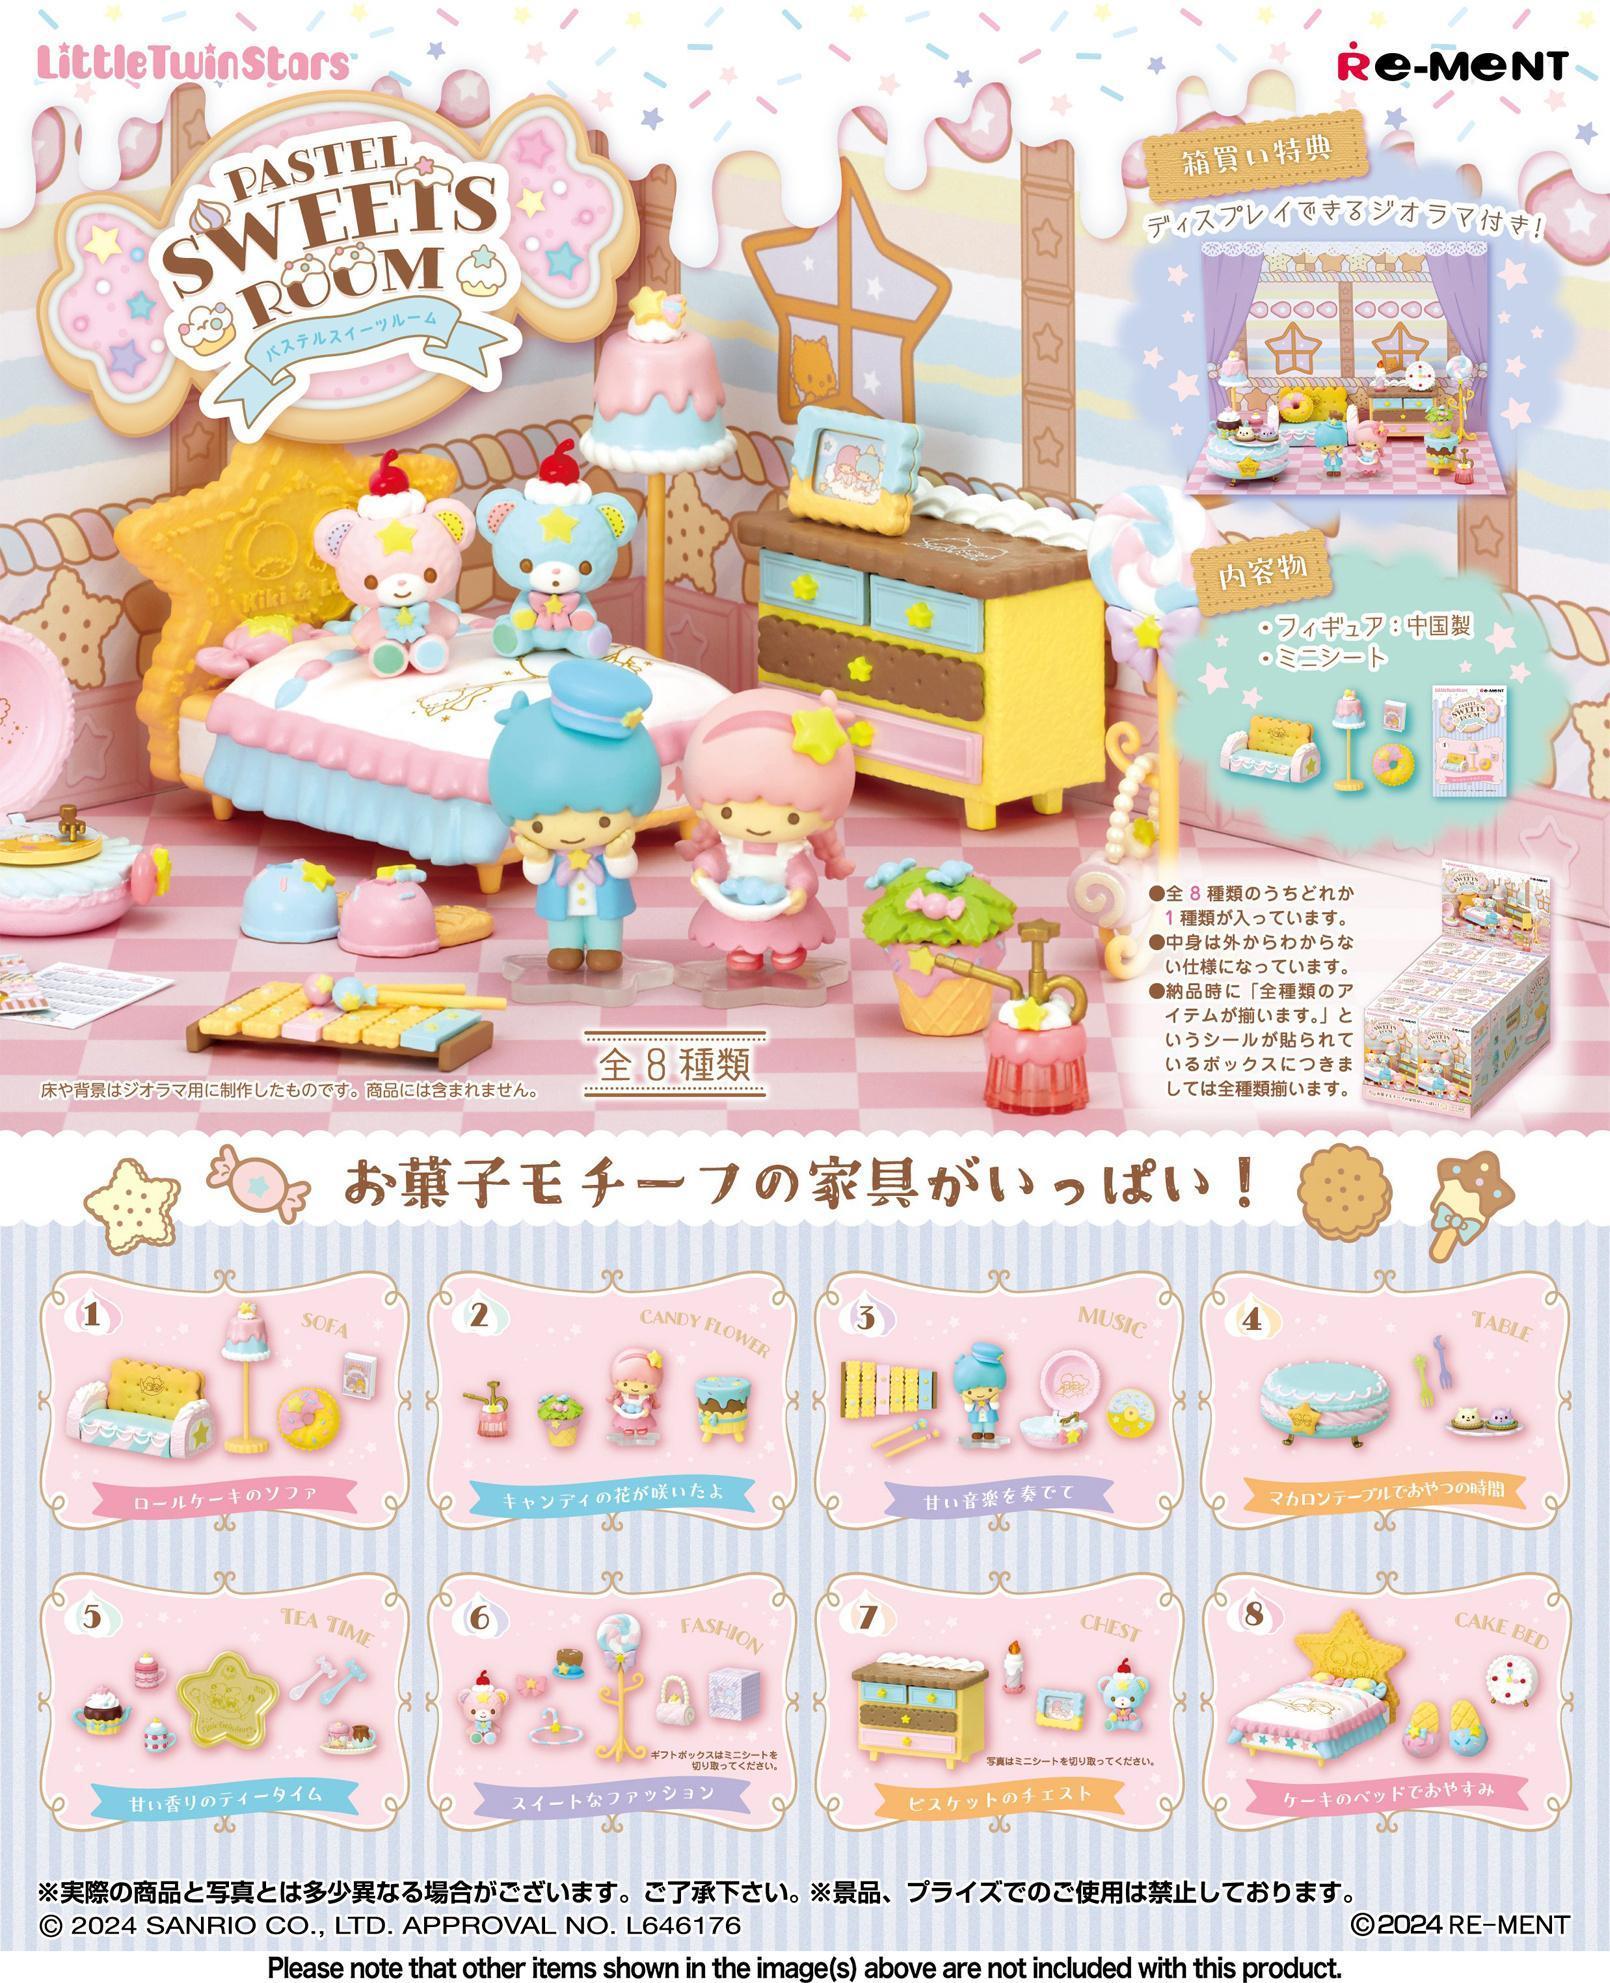 LittleTwinStars - Pastel Sweets Room